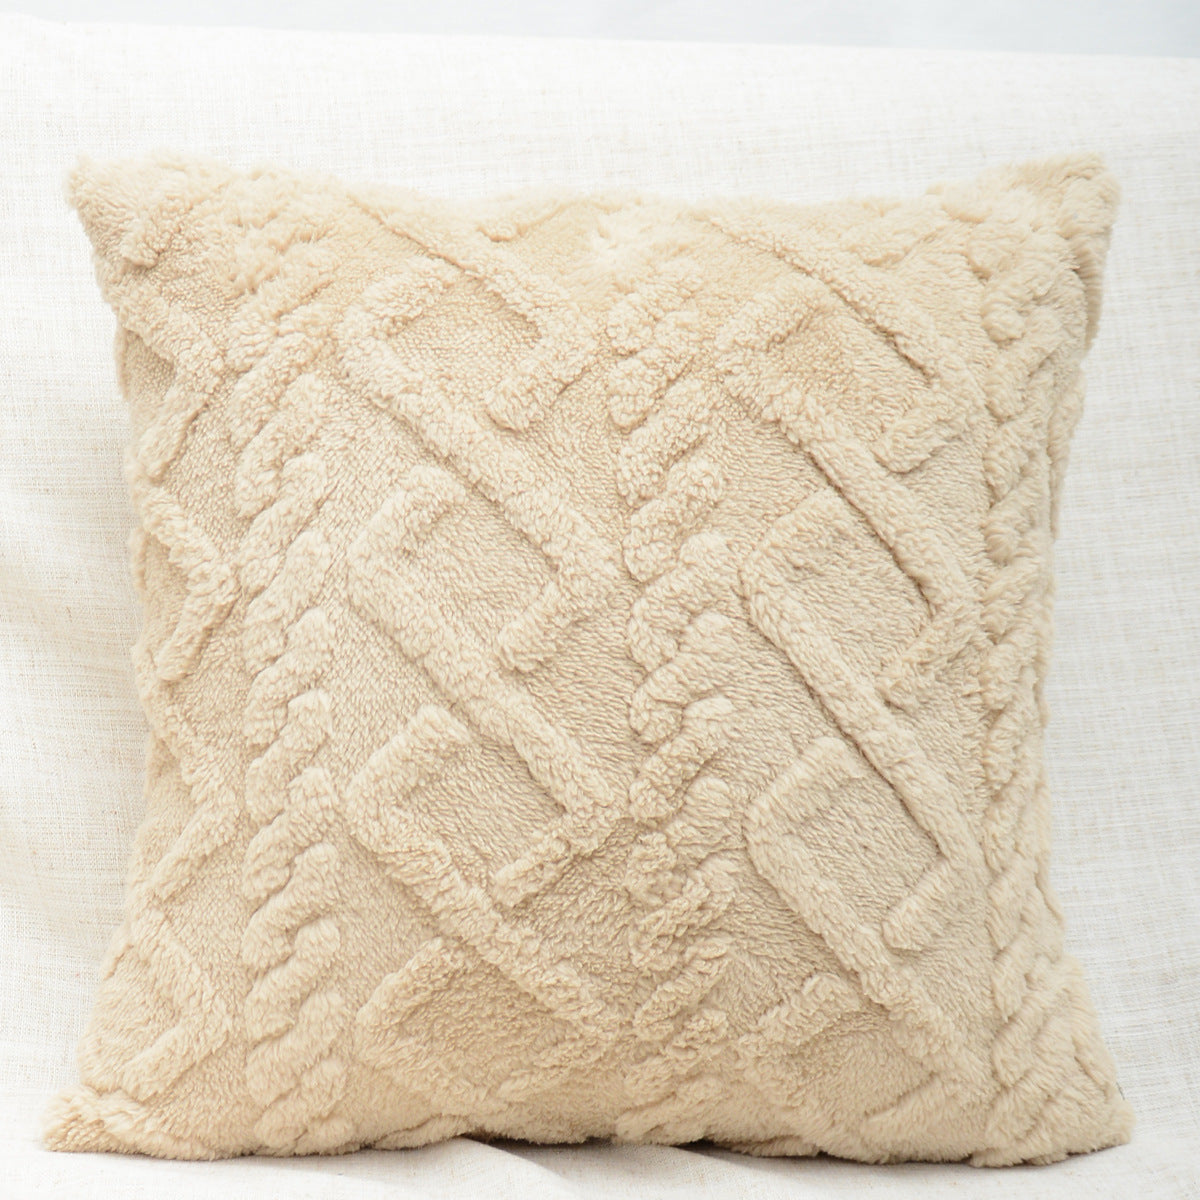 Shearing Groove Artificial Plush Cushion Cover